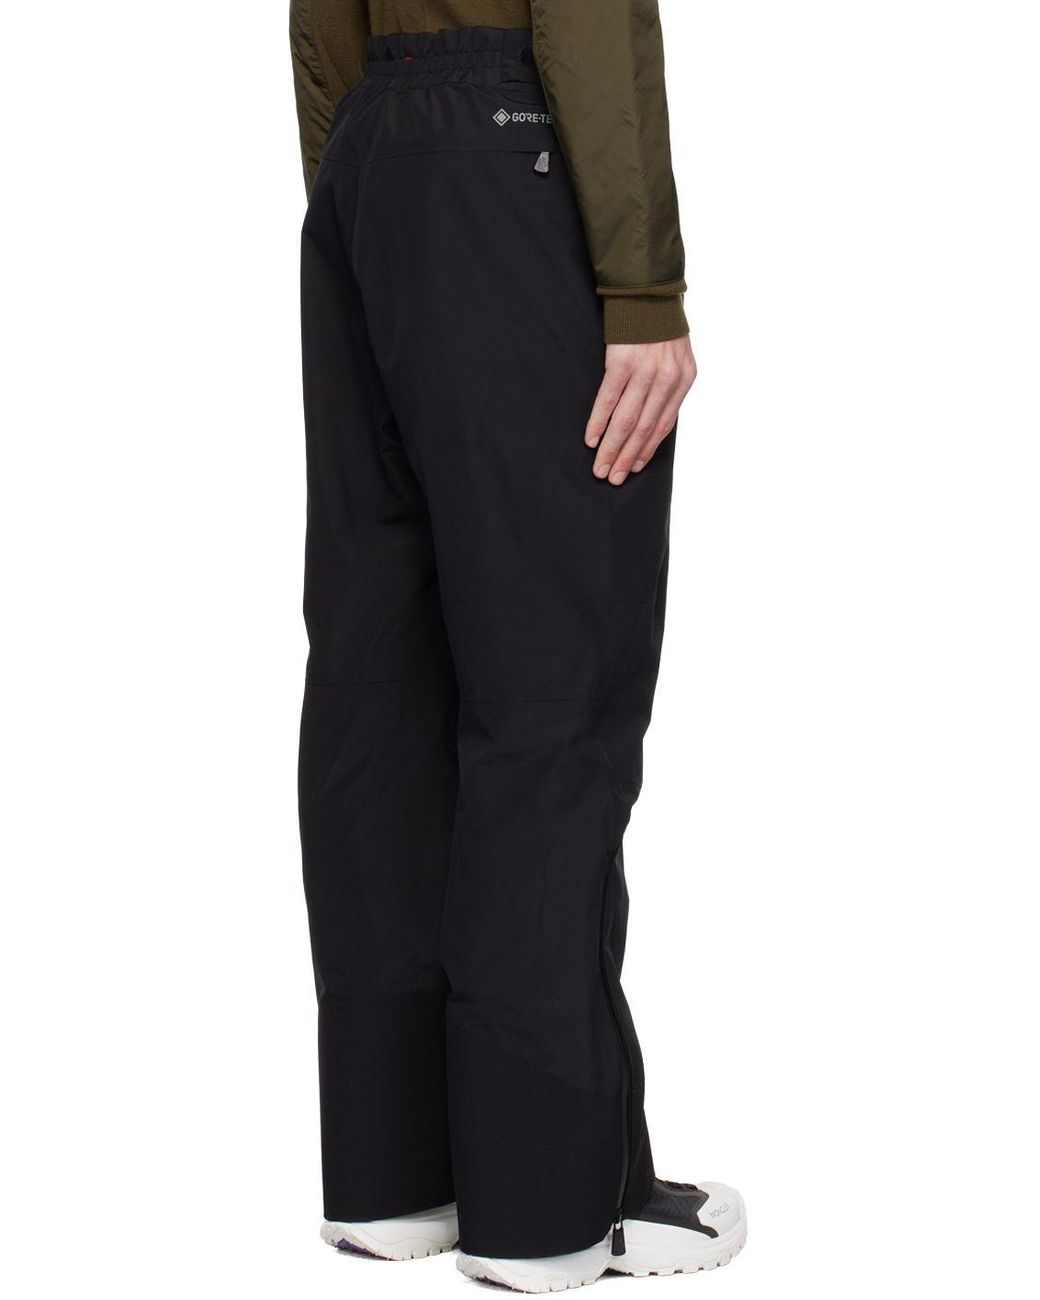 Men Cargo Trousers Pants SG-300 - Grey